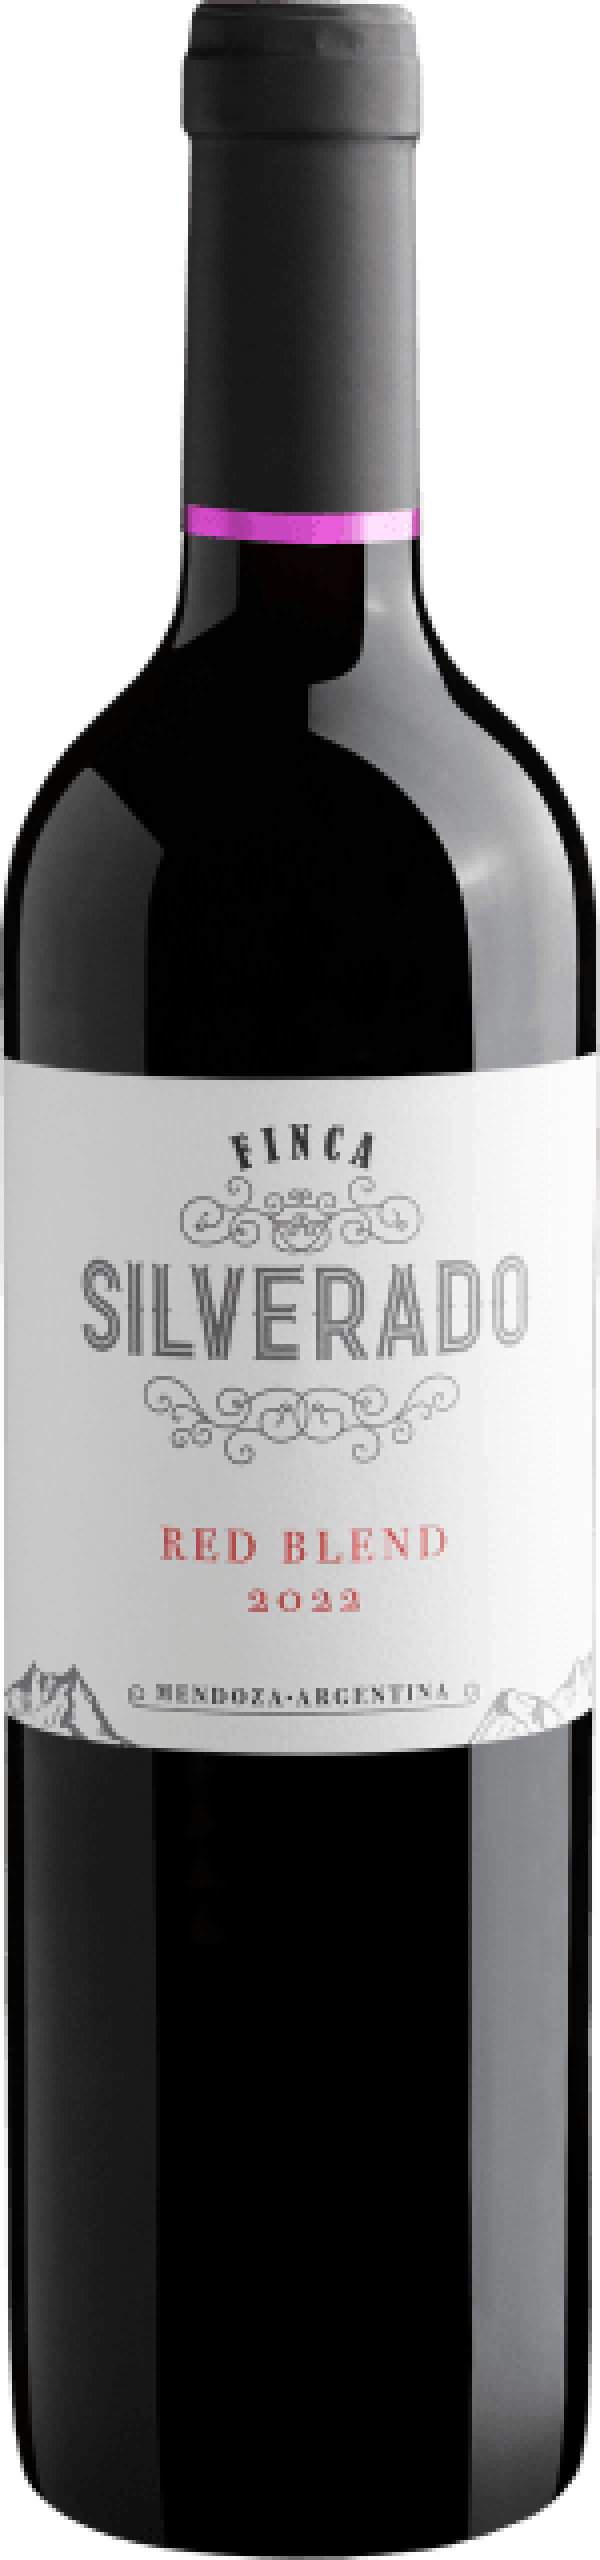 Finca Silverado Red Blend 2022